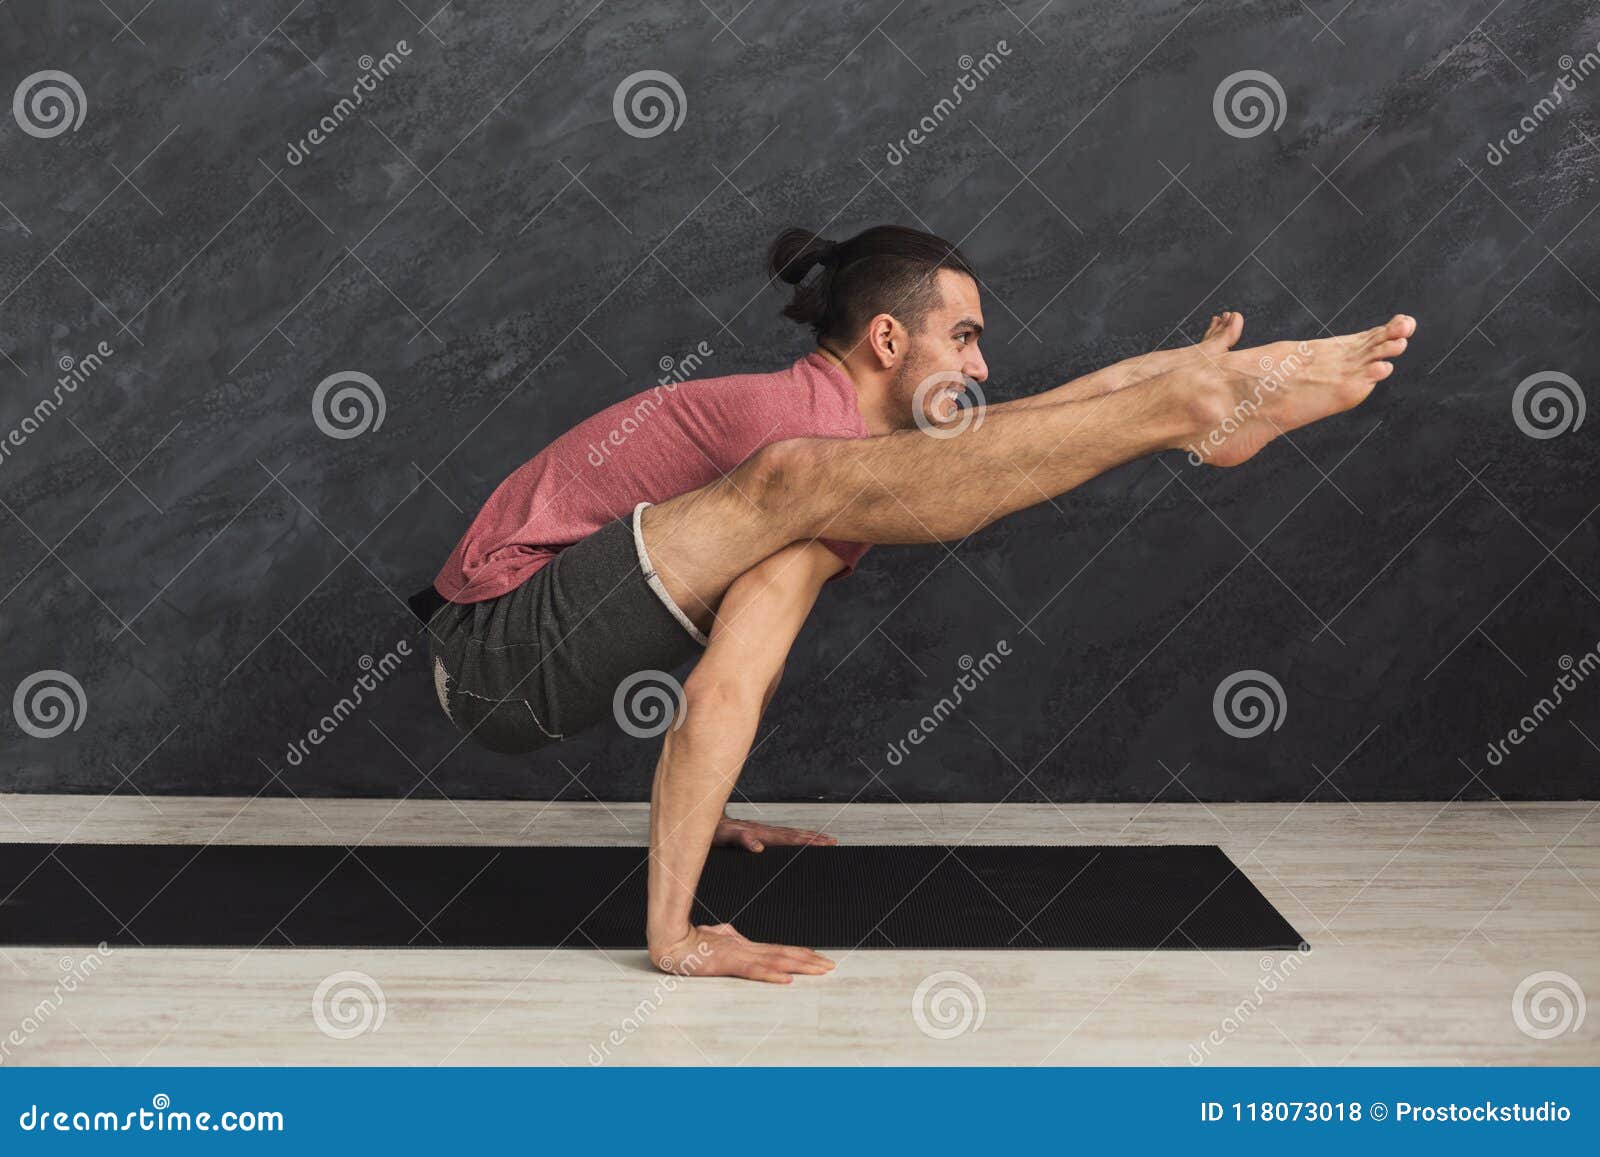 Challenge Yoga Pose: Handstand (Adho Mukha Vrksasana)| YOGAPEDIA